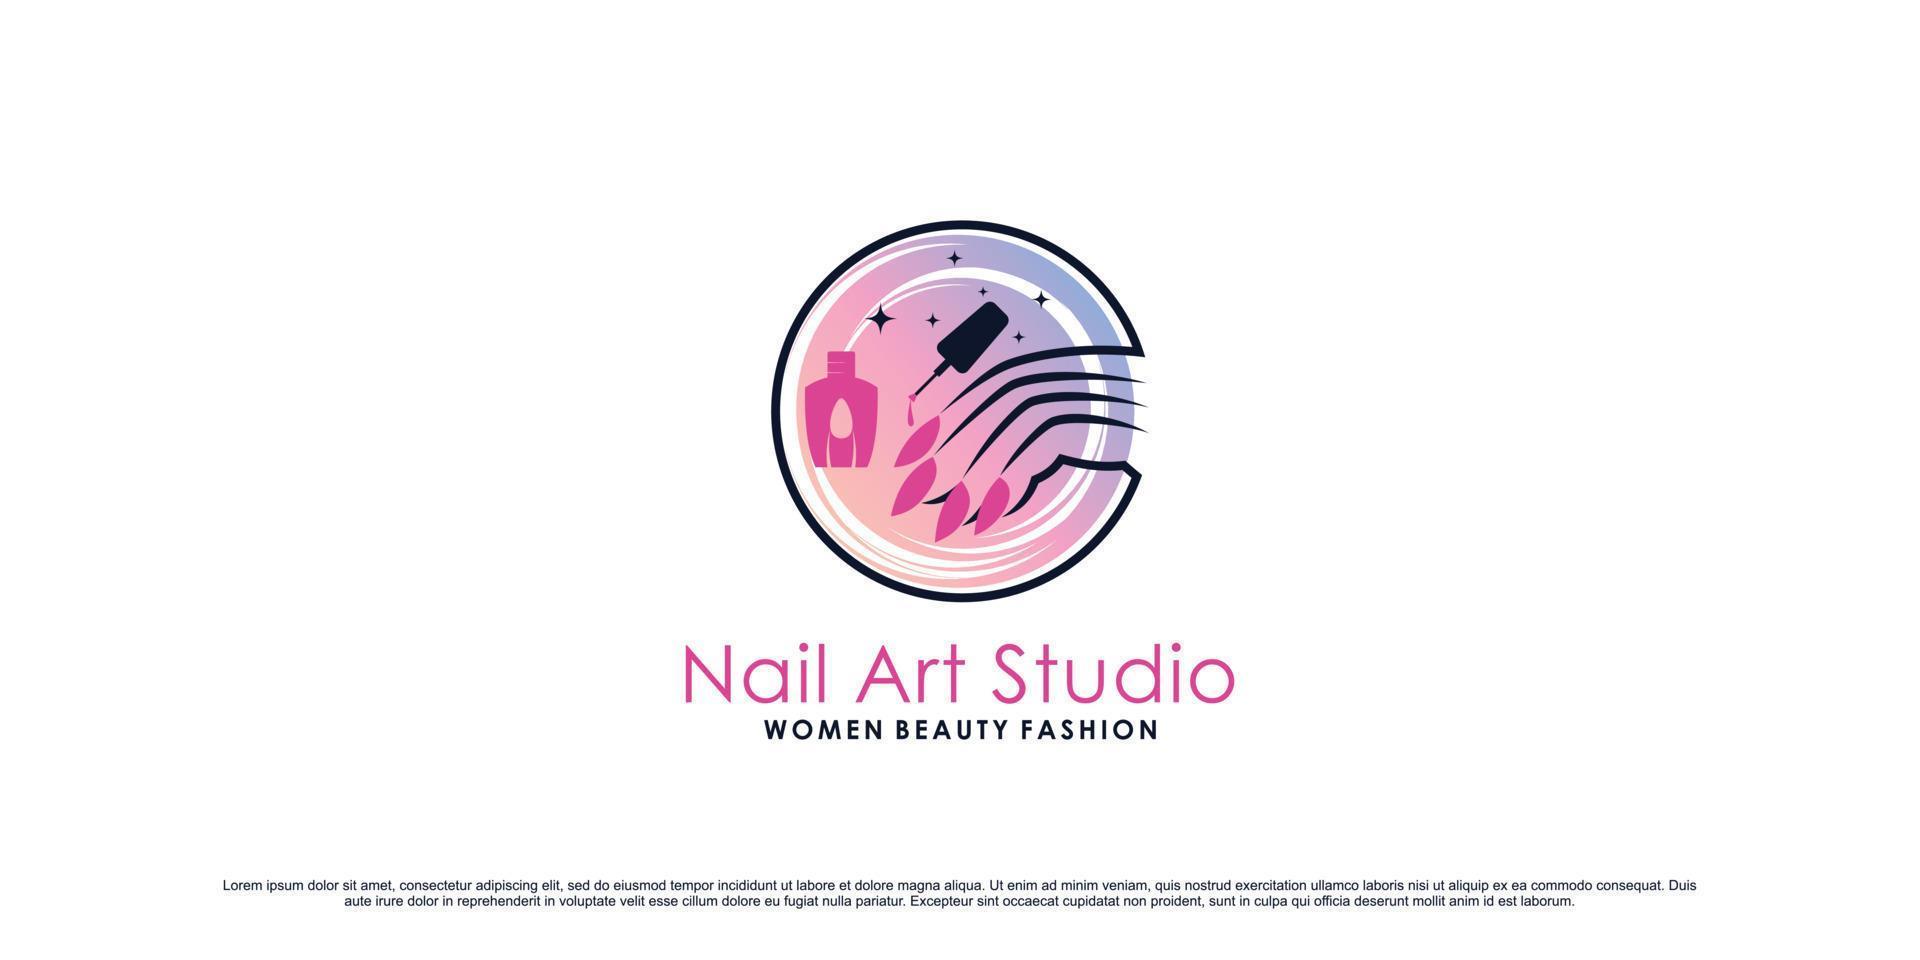 Nail polish logo design or nail art icon for beauty salon with creative concept Premium Vector